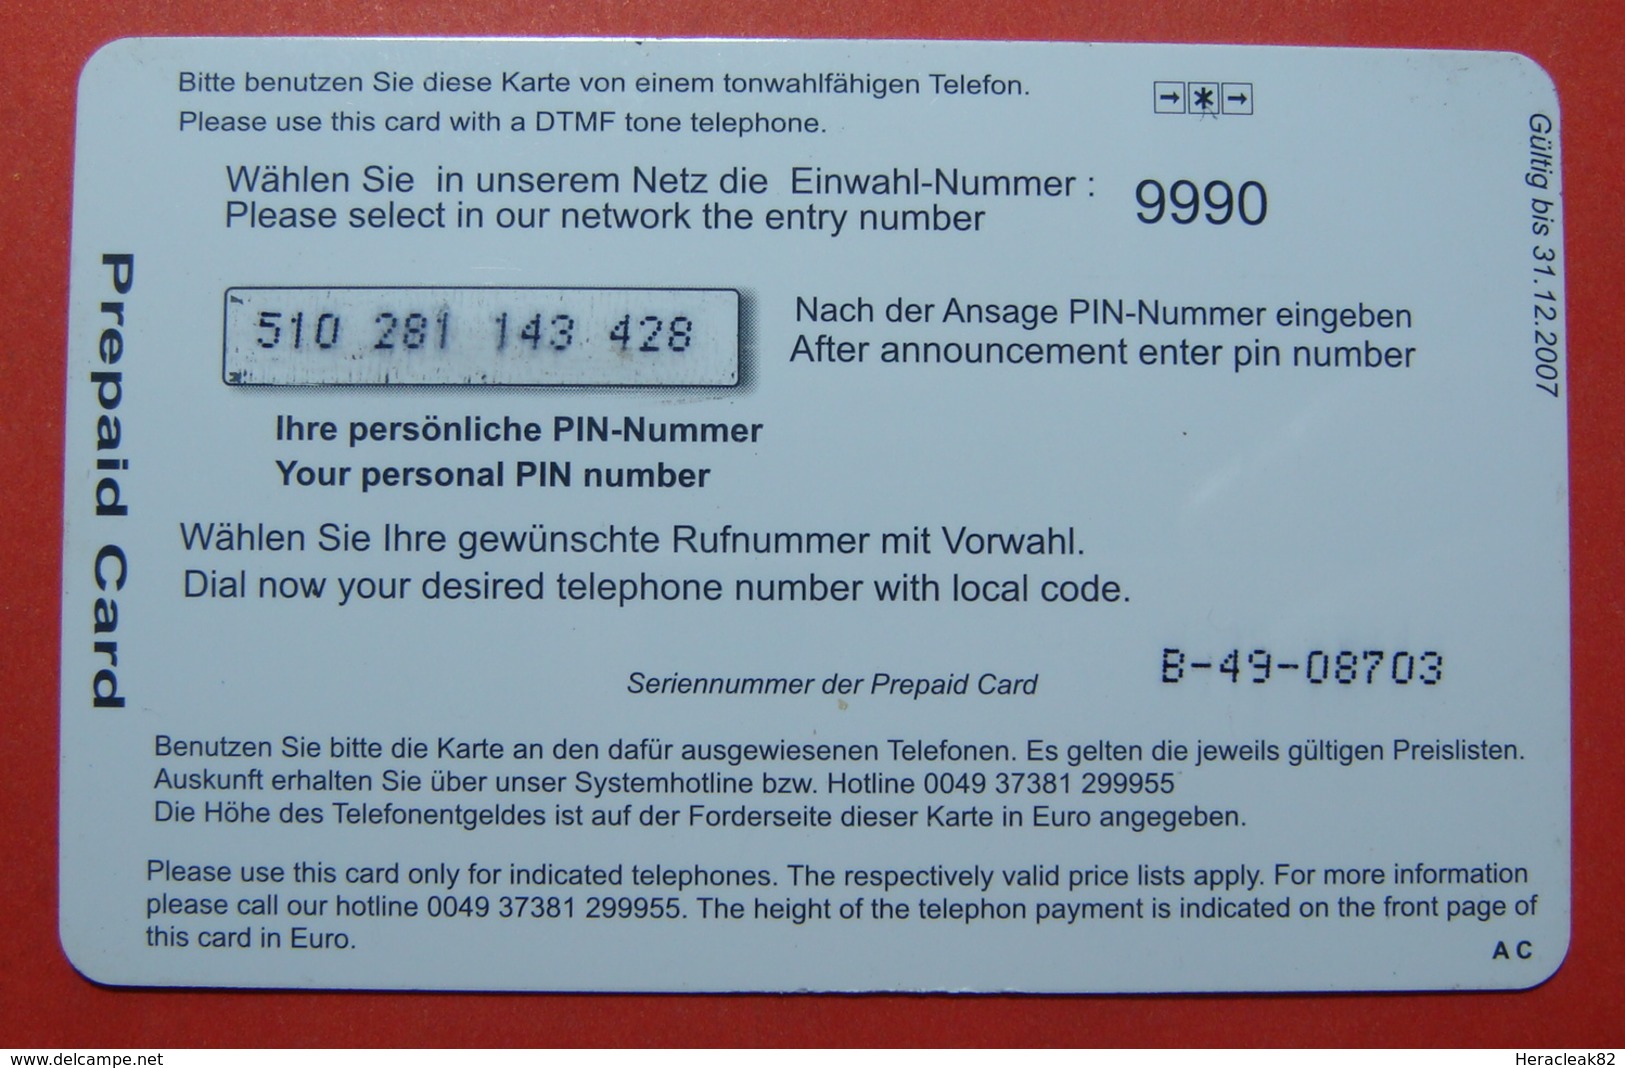 Serie B-49-08..., German Army In Kosovo Prepaid Phone CARD 10 Euro Used Operator KBIMPULS *Satellite* - Kosovo